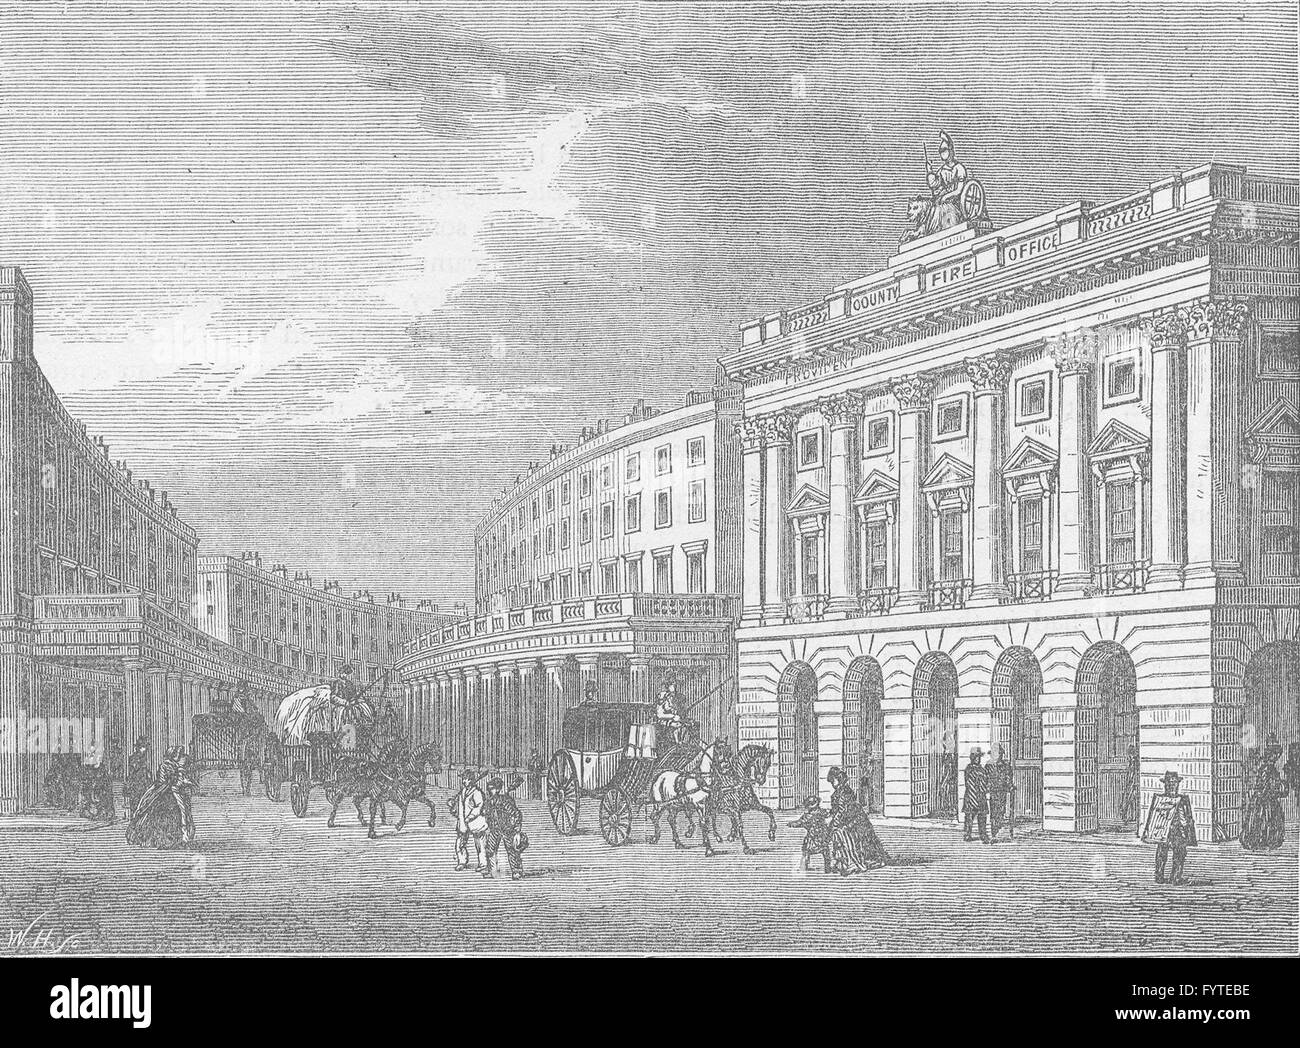 REGENT STREET : le Quadrant, avant la suppression de la colonnade. Londres, c1880 Banque D'Images